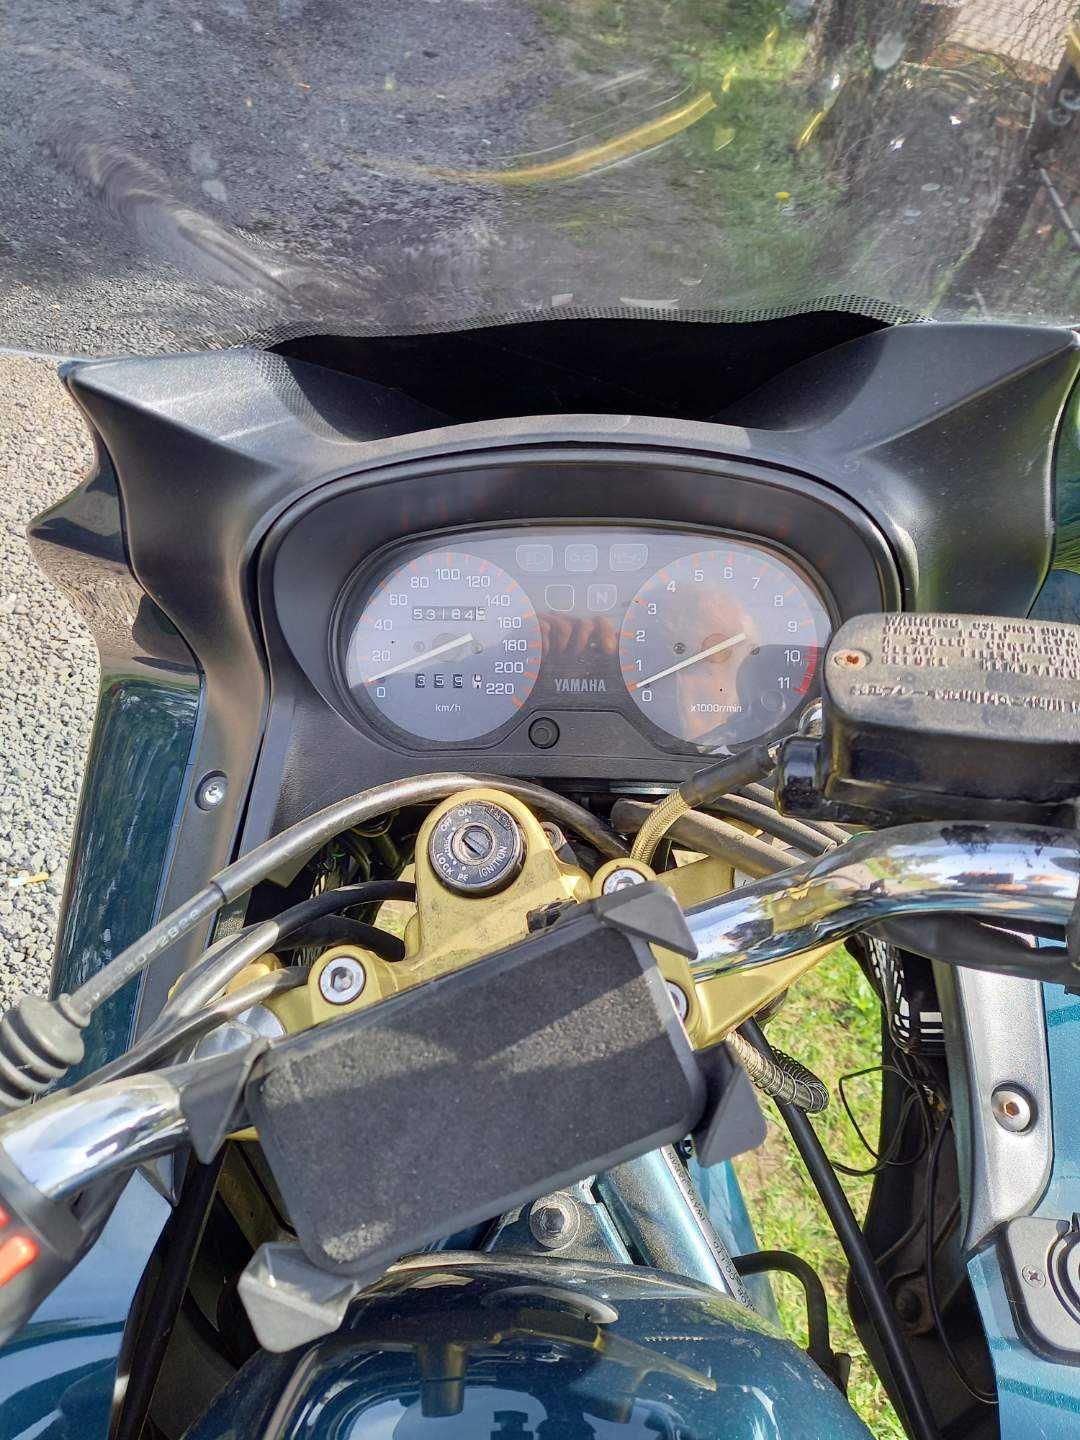 Motocykl Yamaha  xj600